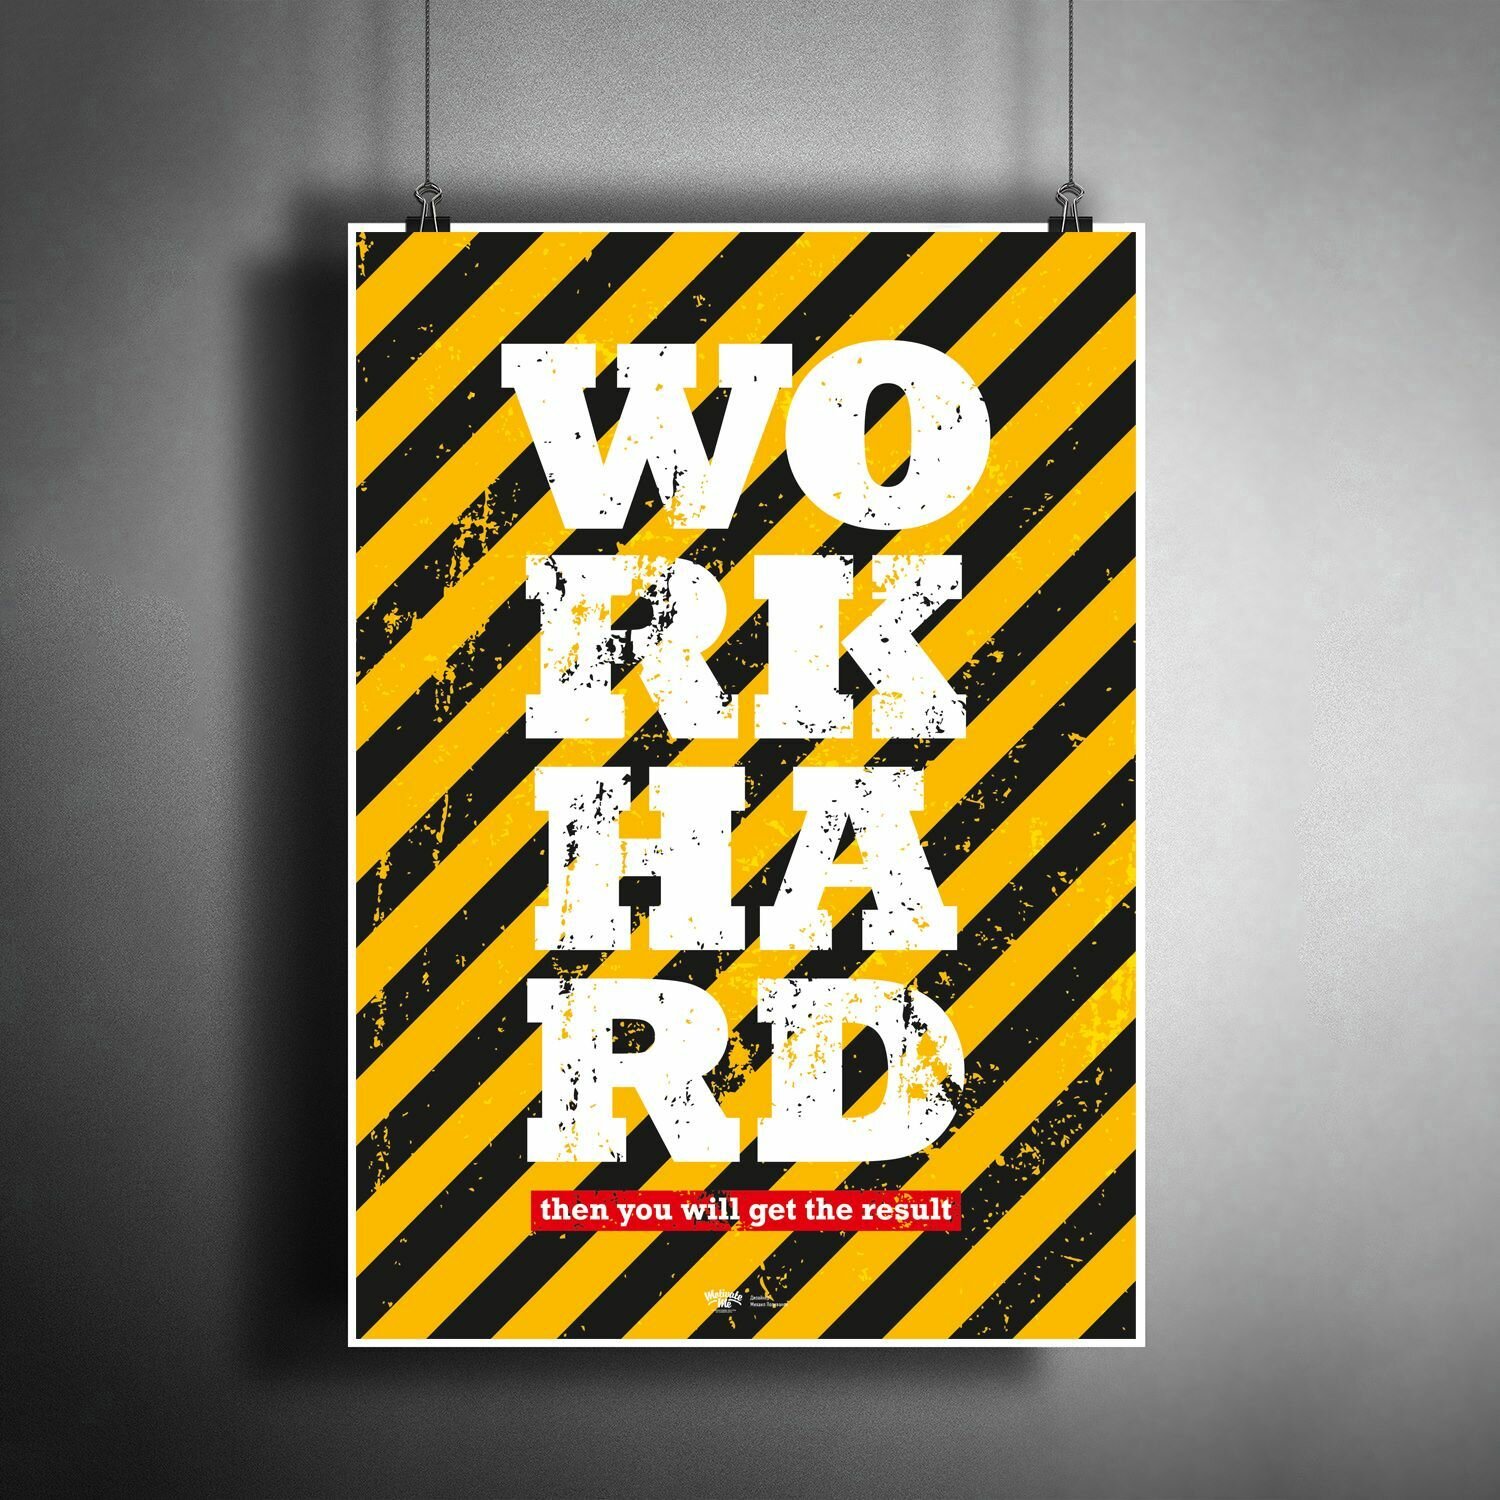 Постер плакат для интерьера "Work Hard" Работай Усердно! / Мотивация дома, офиса, комнаты, квартиры, фитнес зал A3 (297 x 420 мм)